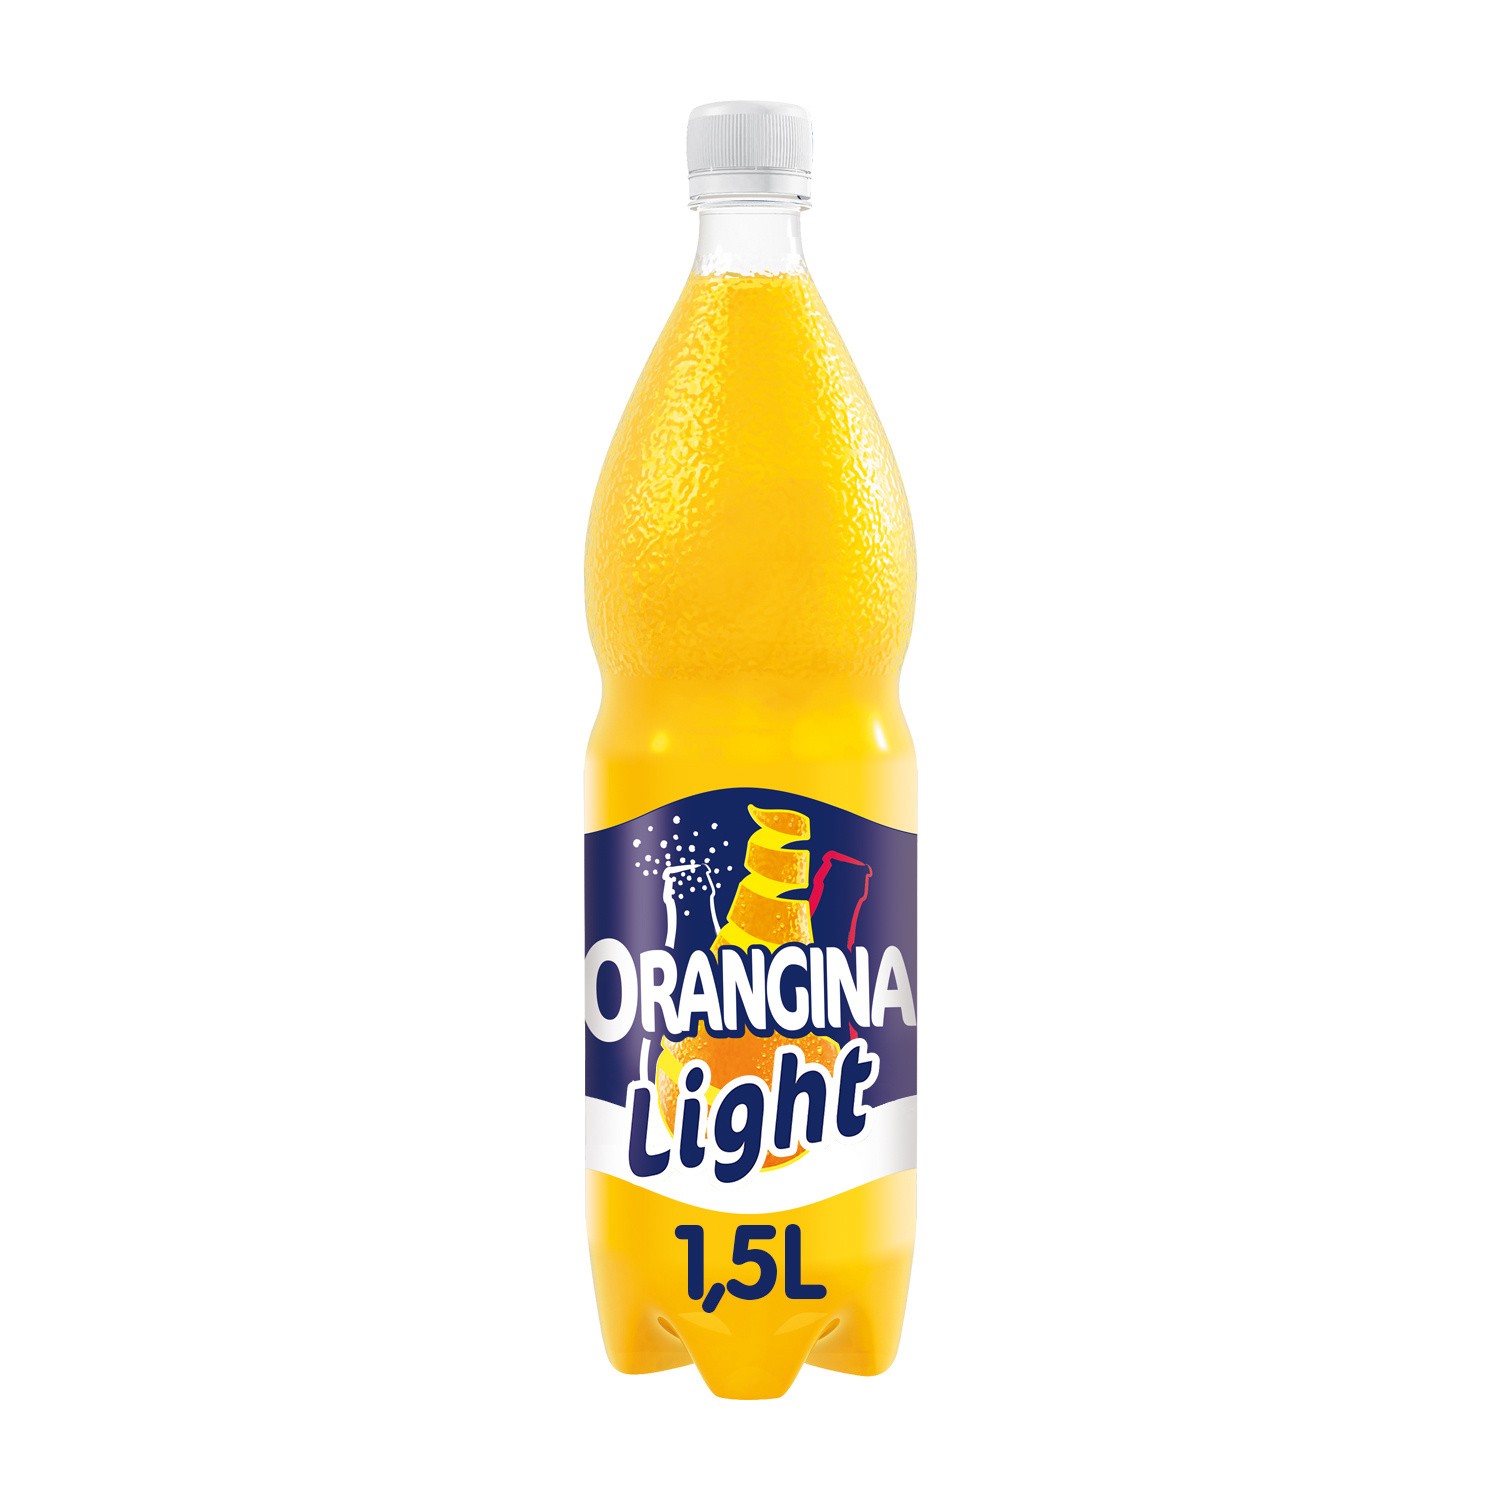 Orange Soda Orangina Light Buy Online My French Grocery